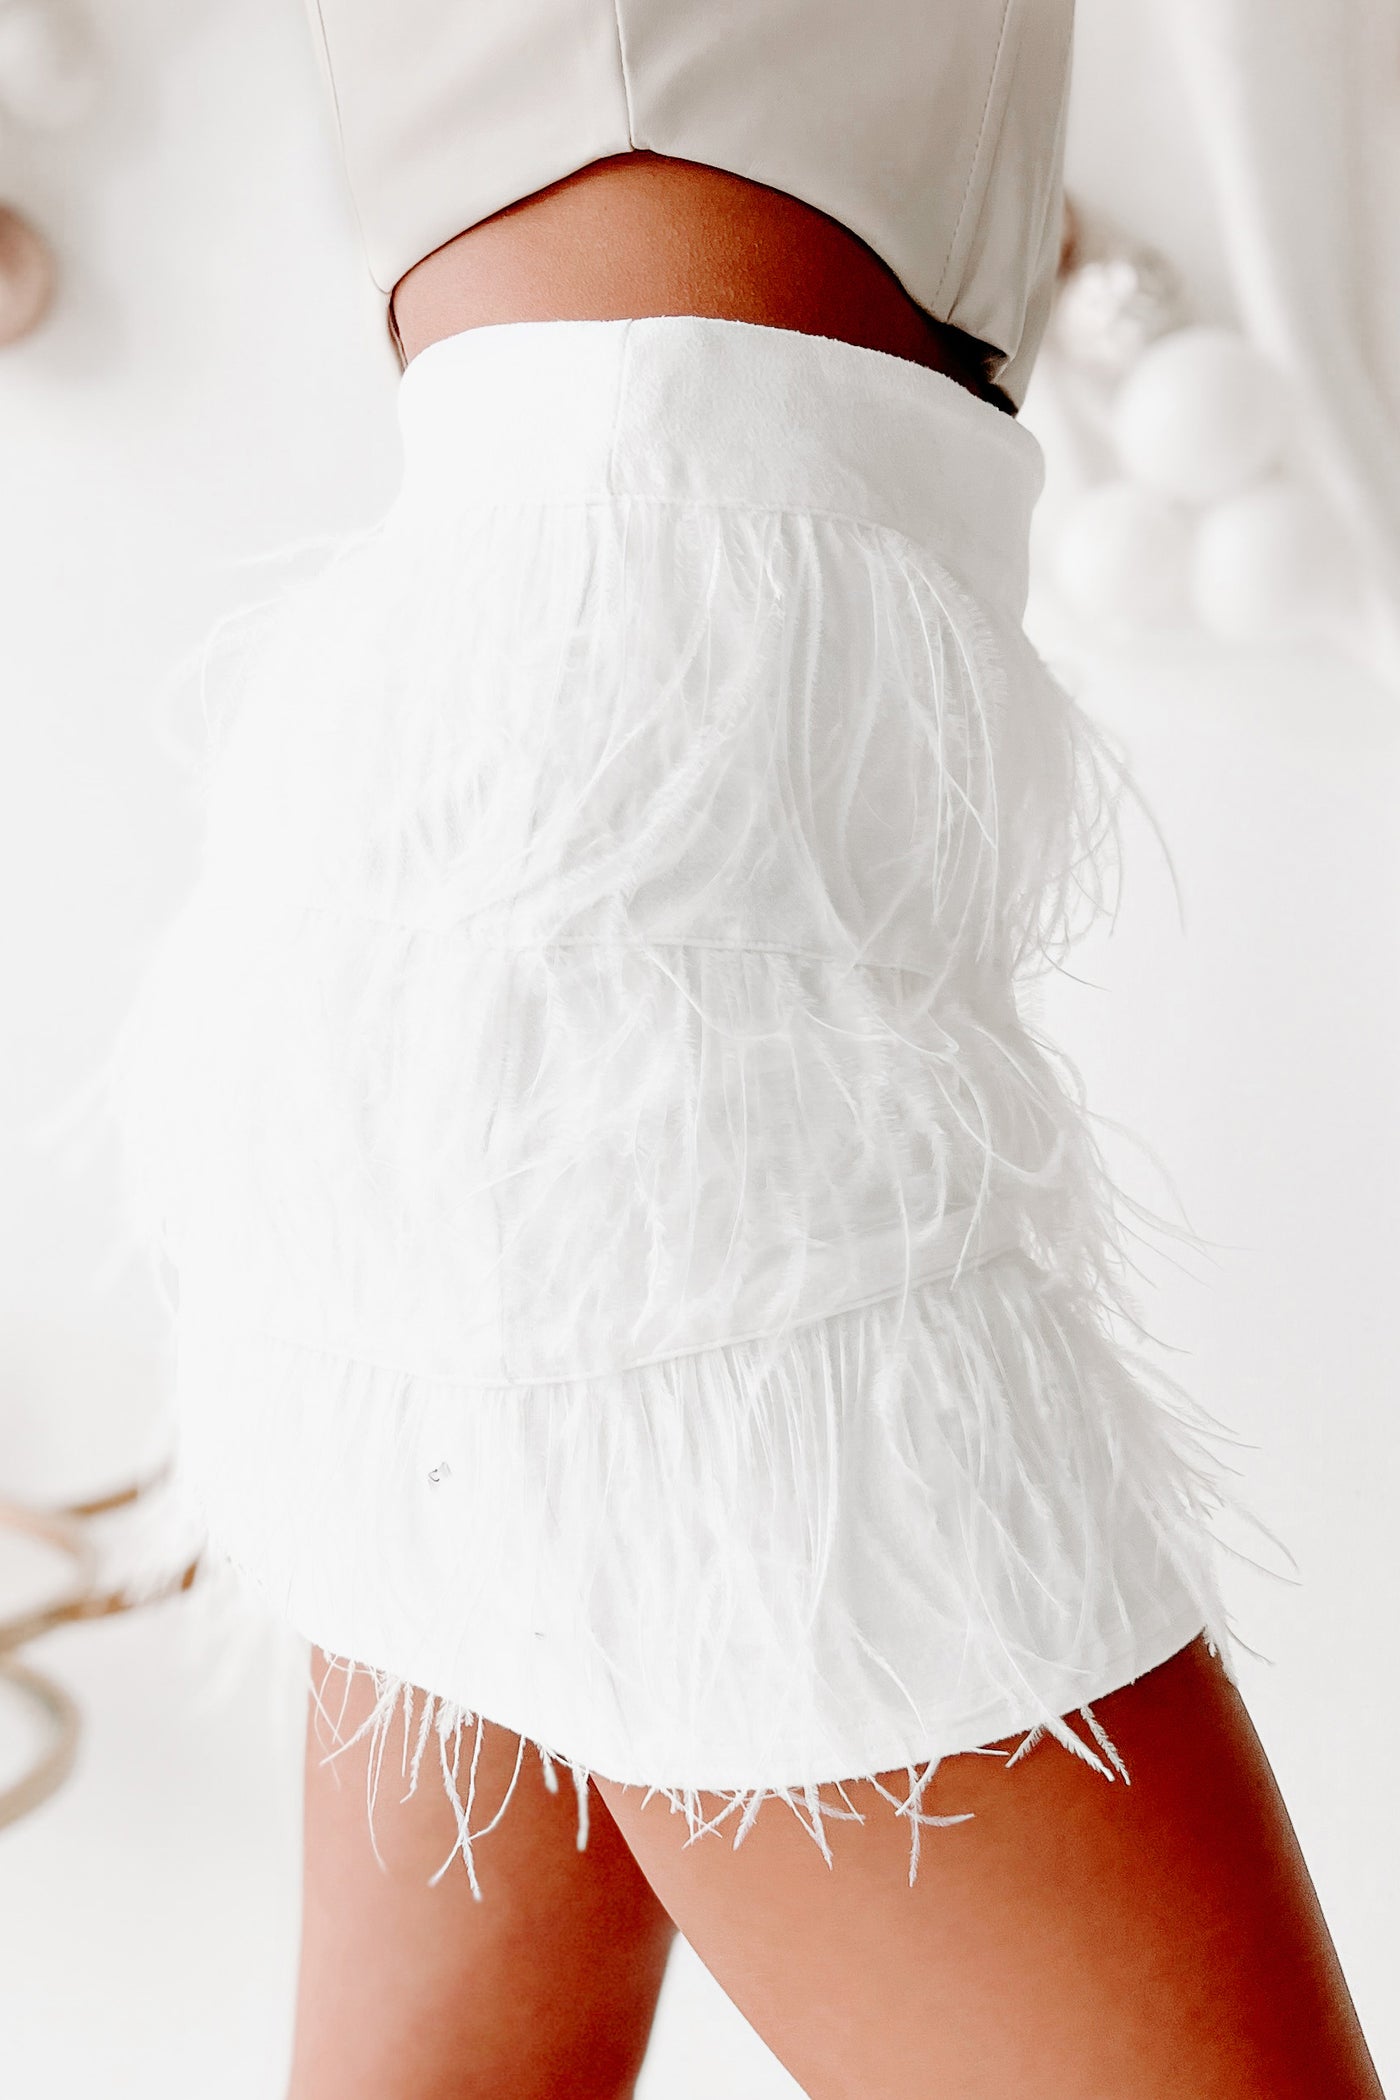 Don't Mind If I Do Feather Mini Skirt (White) - NanaMacs